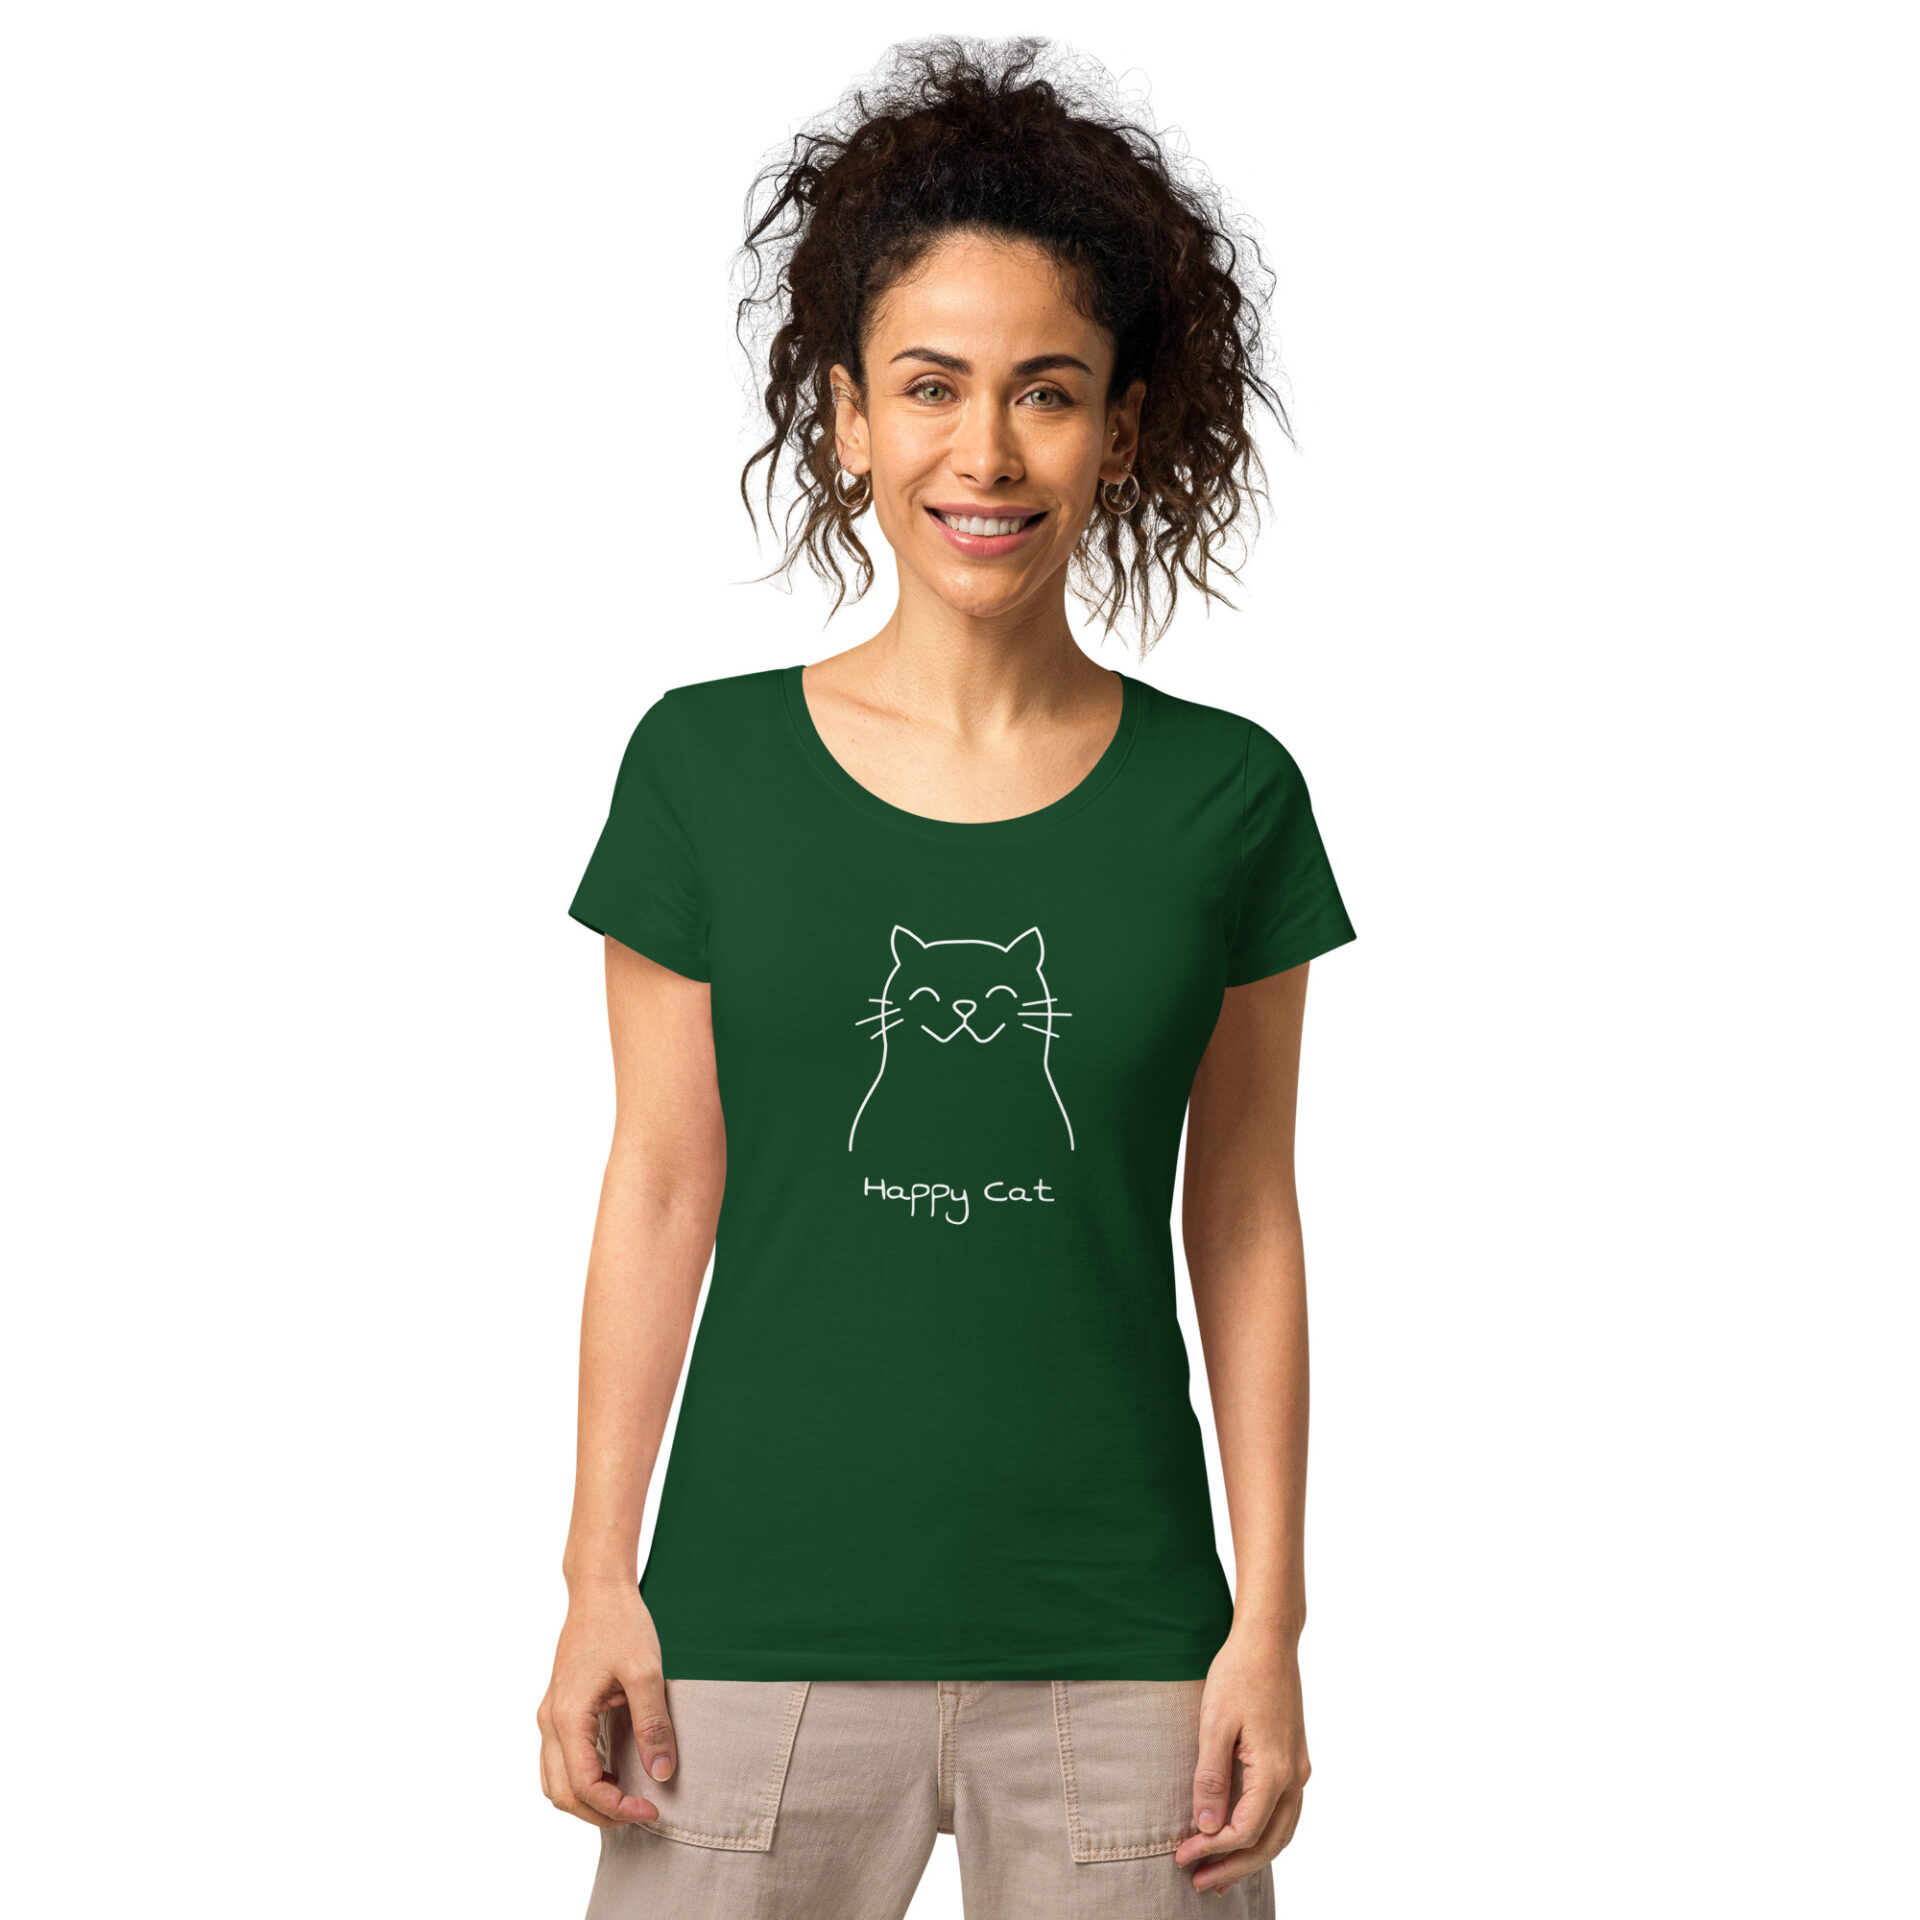 Women’s basic organic t-shirt, “Happy Cat”